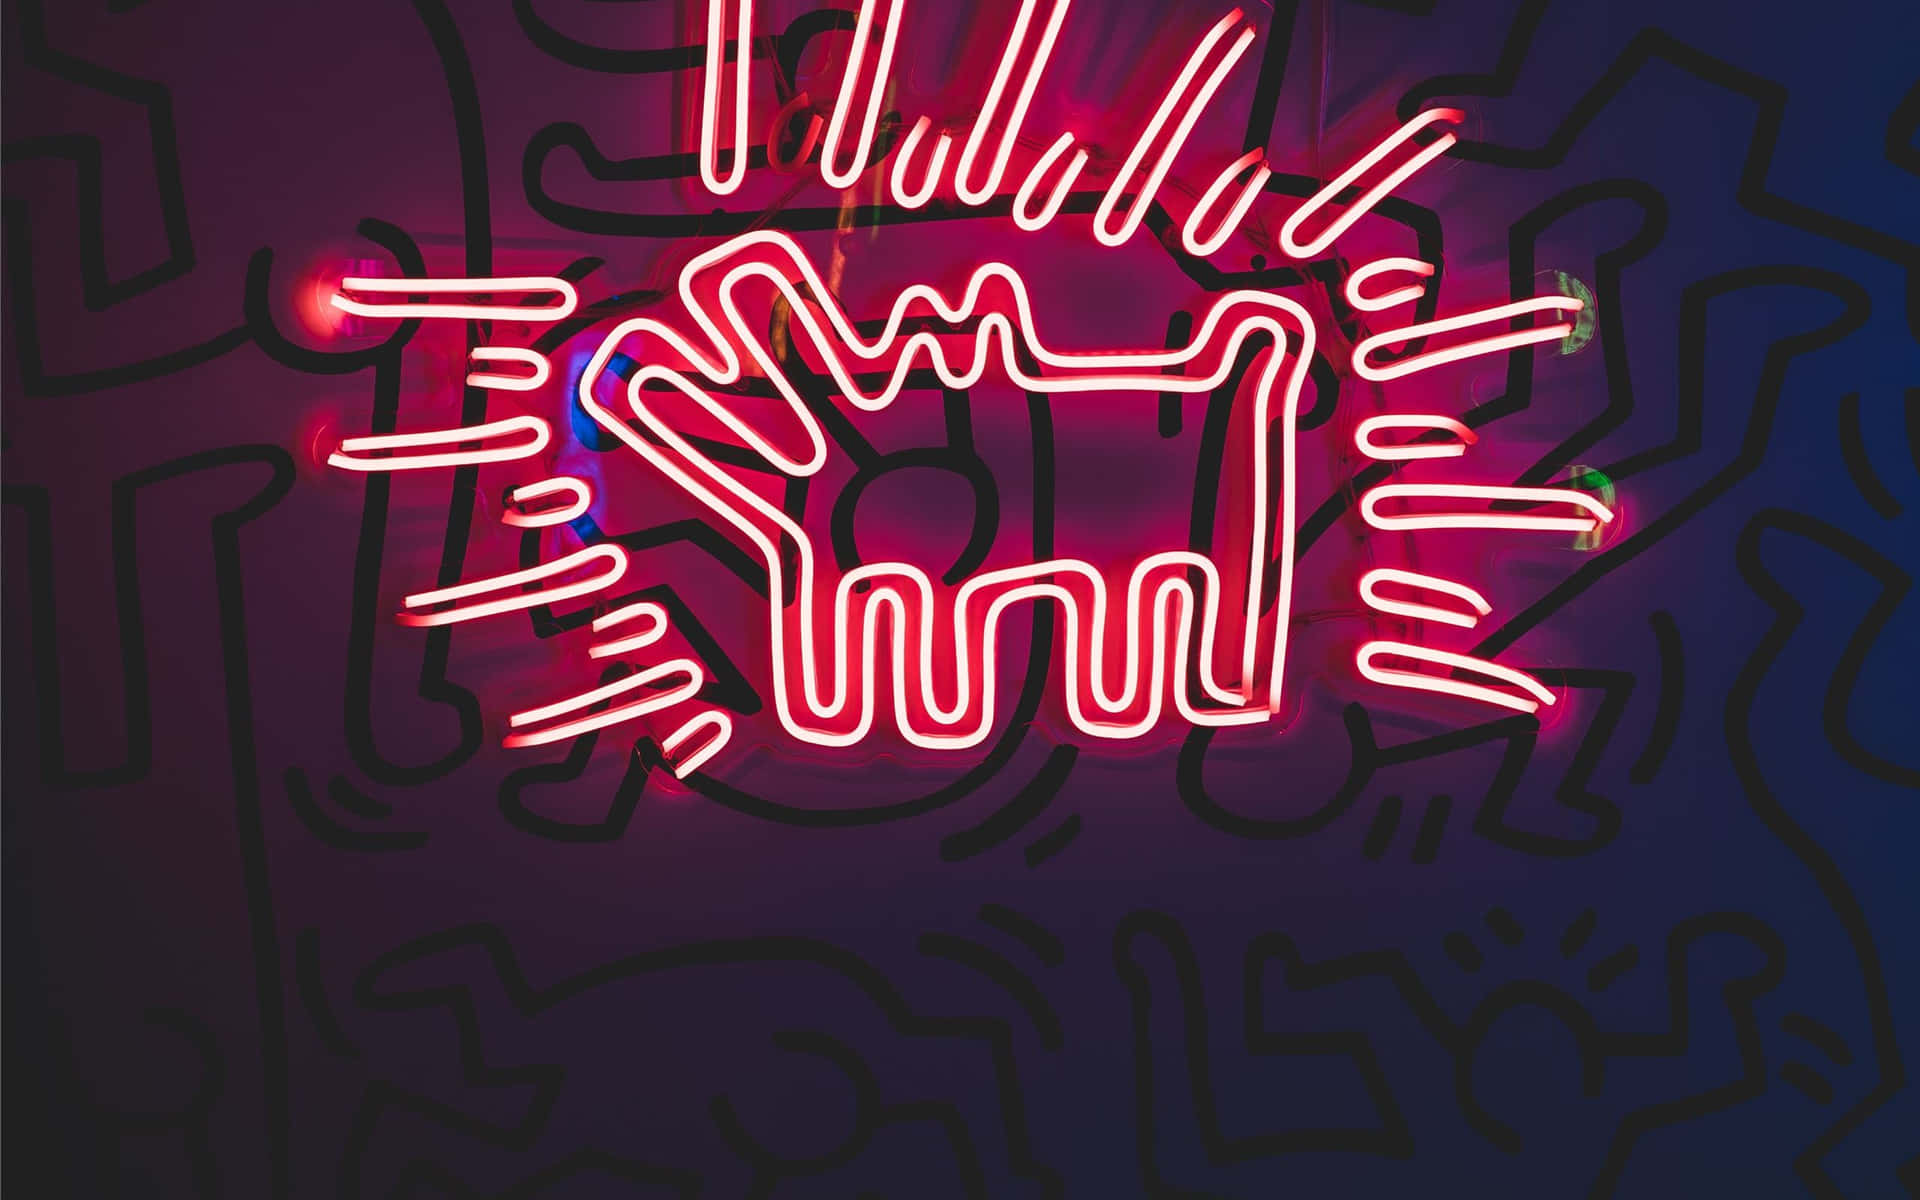 Keith Haring Neon Artwork Wallpaper